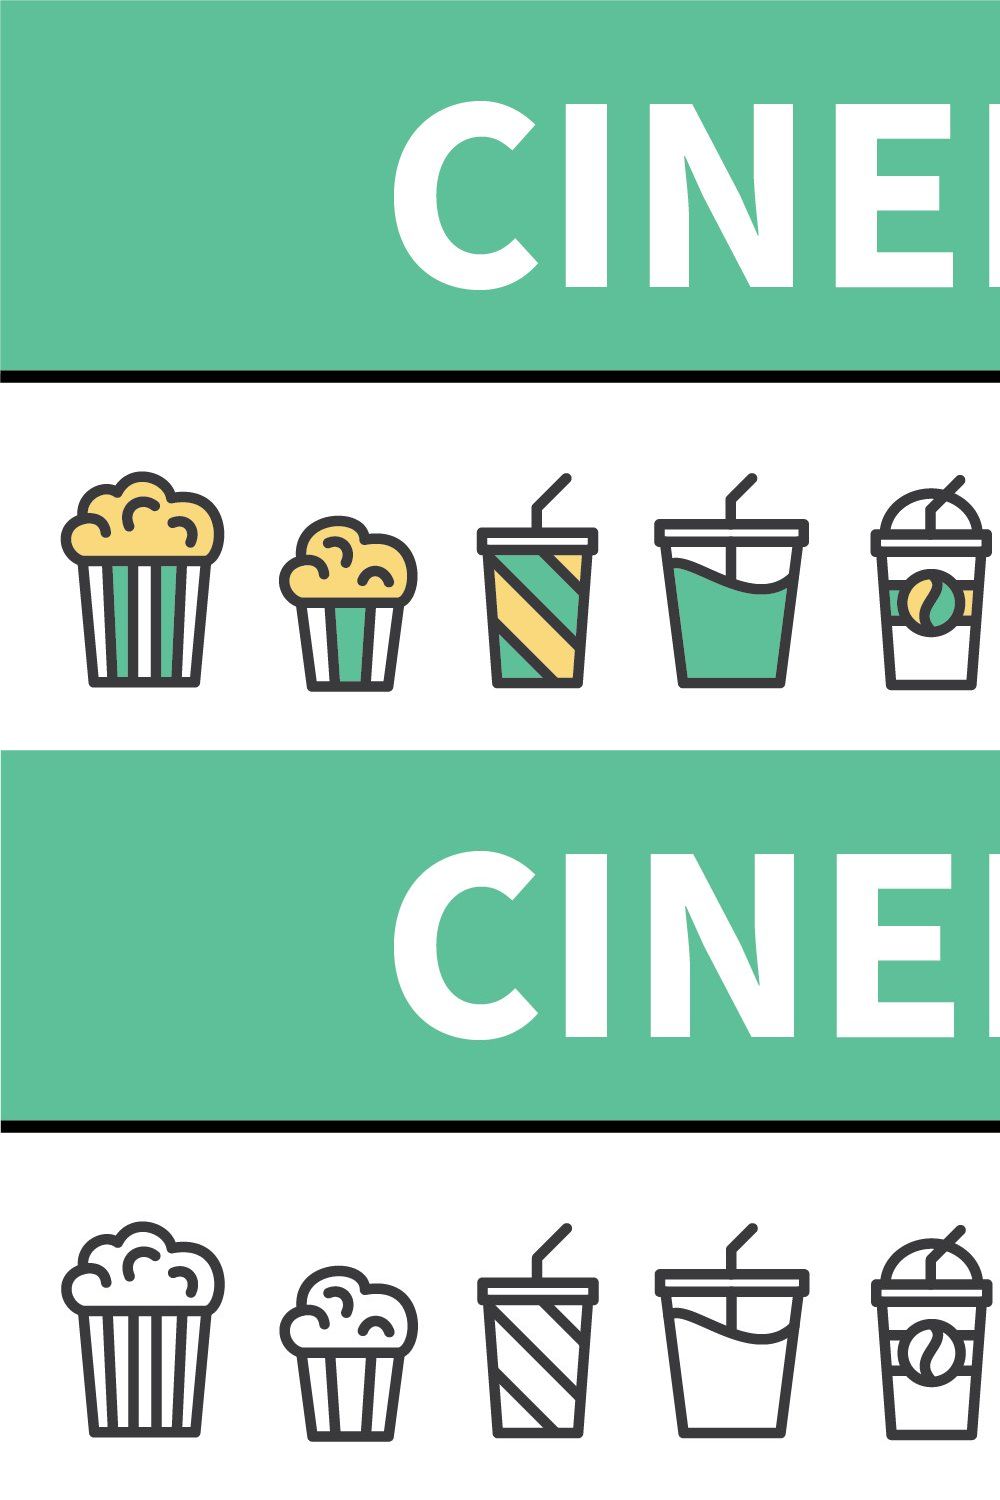 Cinema / Movie / Theater / Film Icon pinterest preview image.